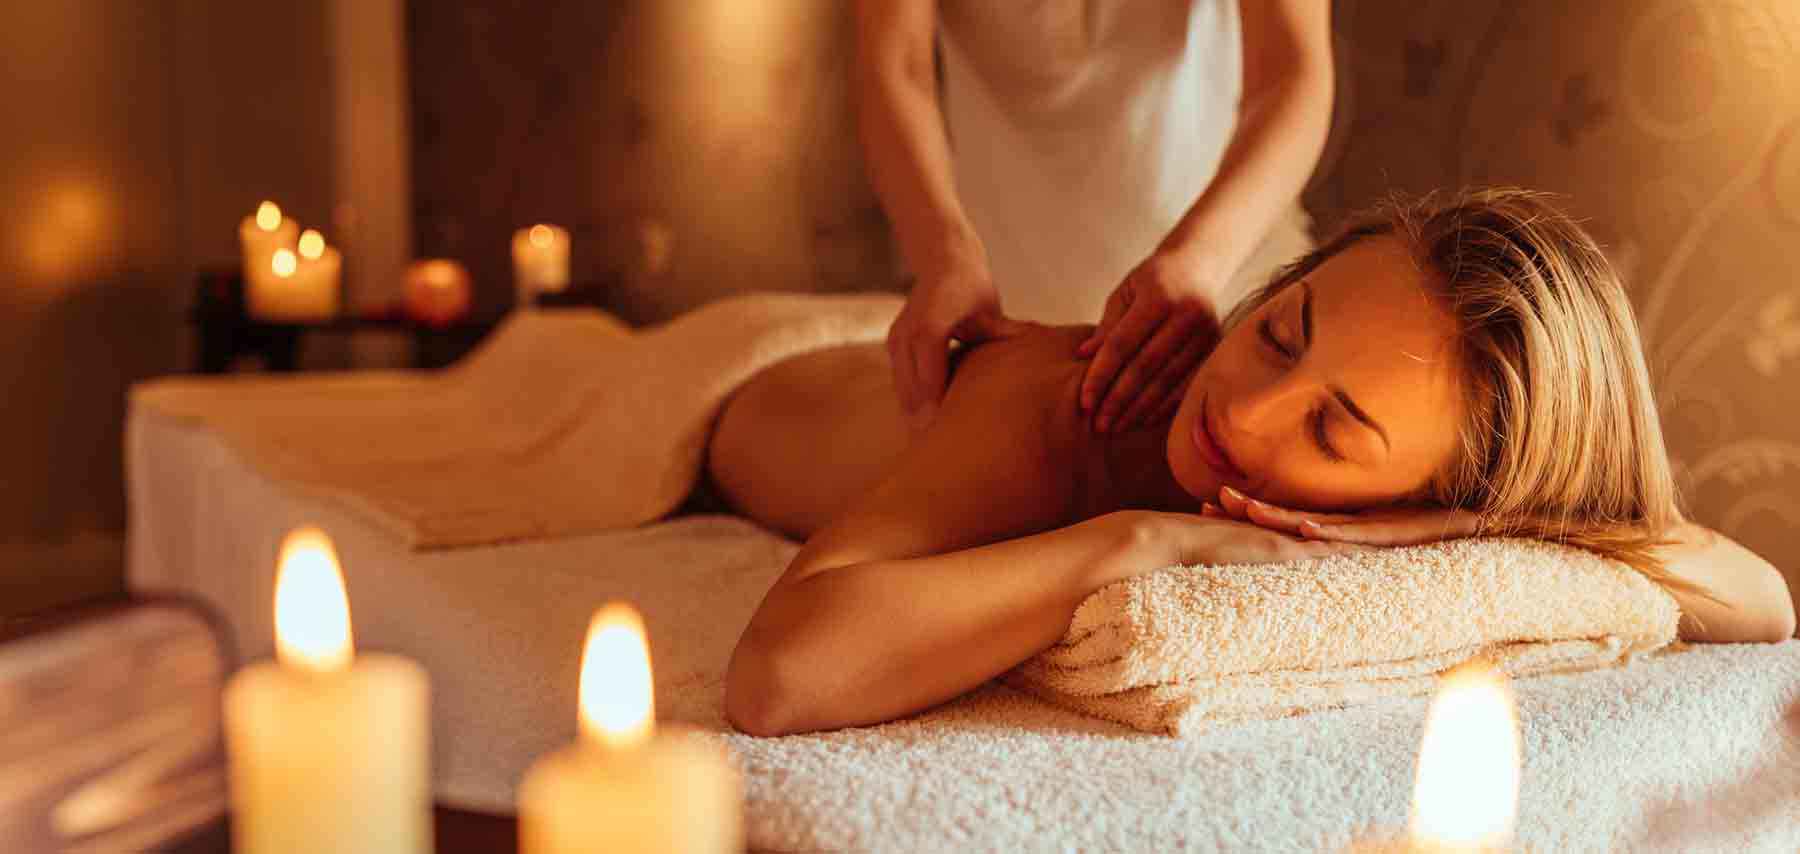 Young woman enjoying a massage at a spa